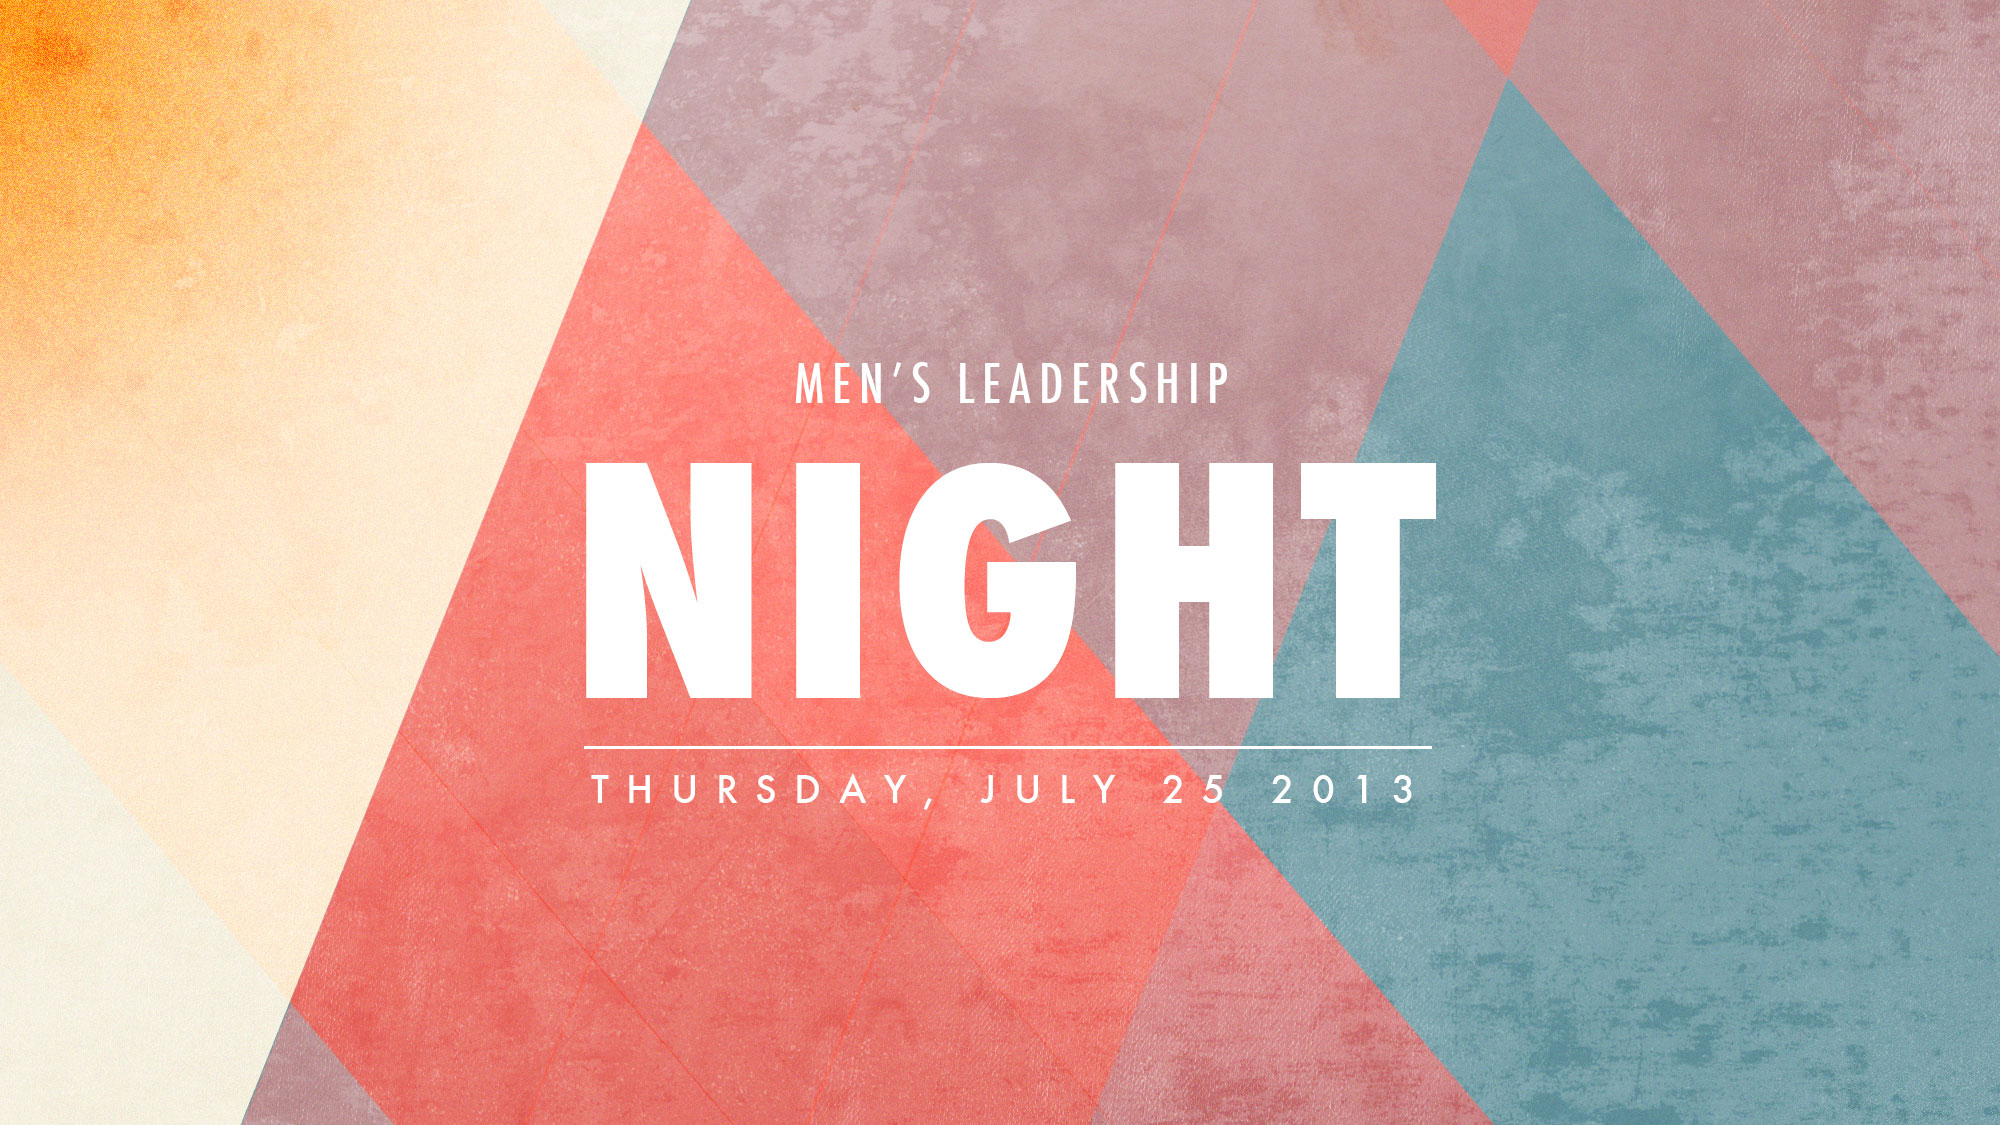 Mens Leadership Night